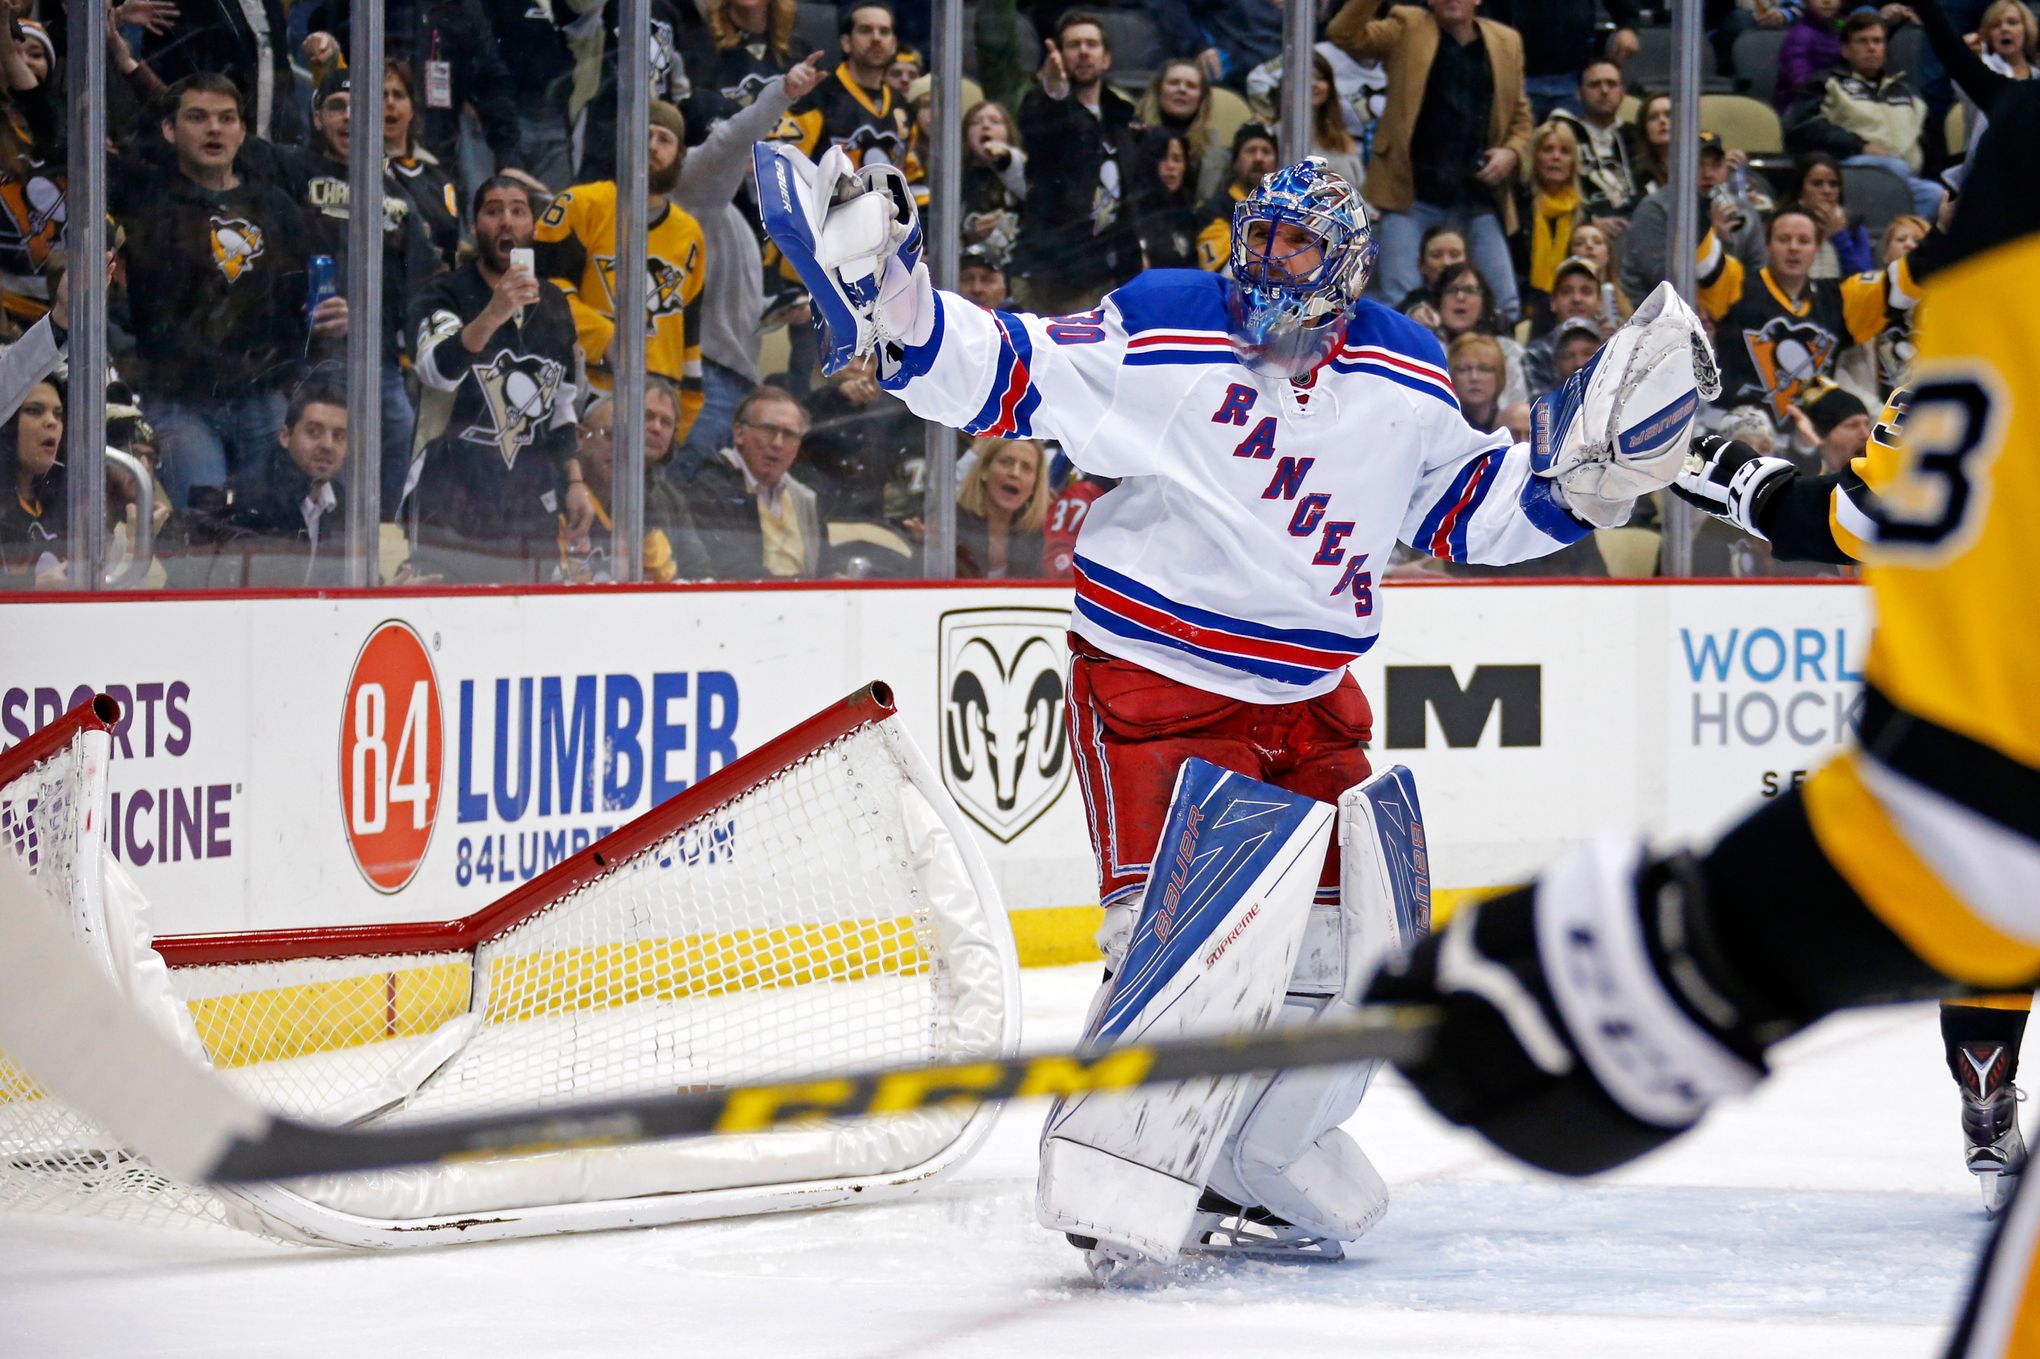 New York Rangers goalie (30) Henrik Lundqvist blocks a shot on